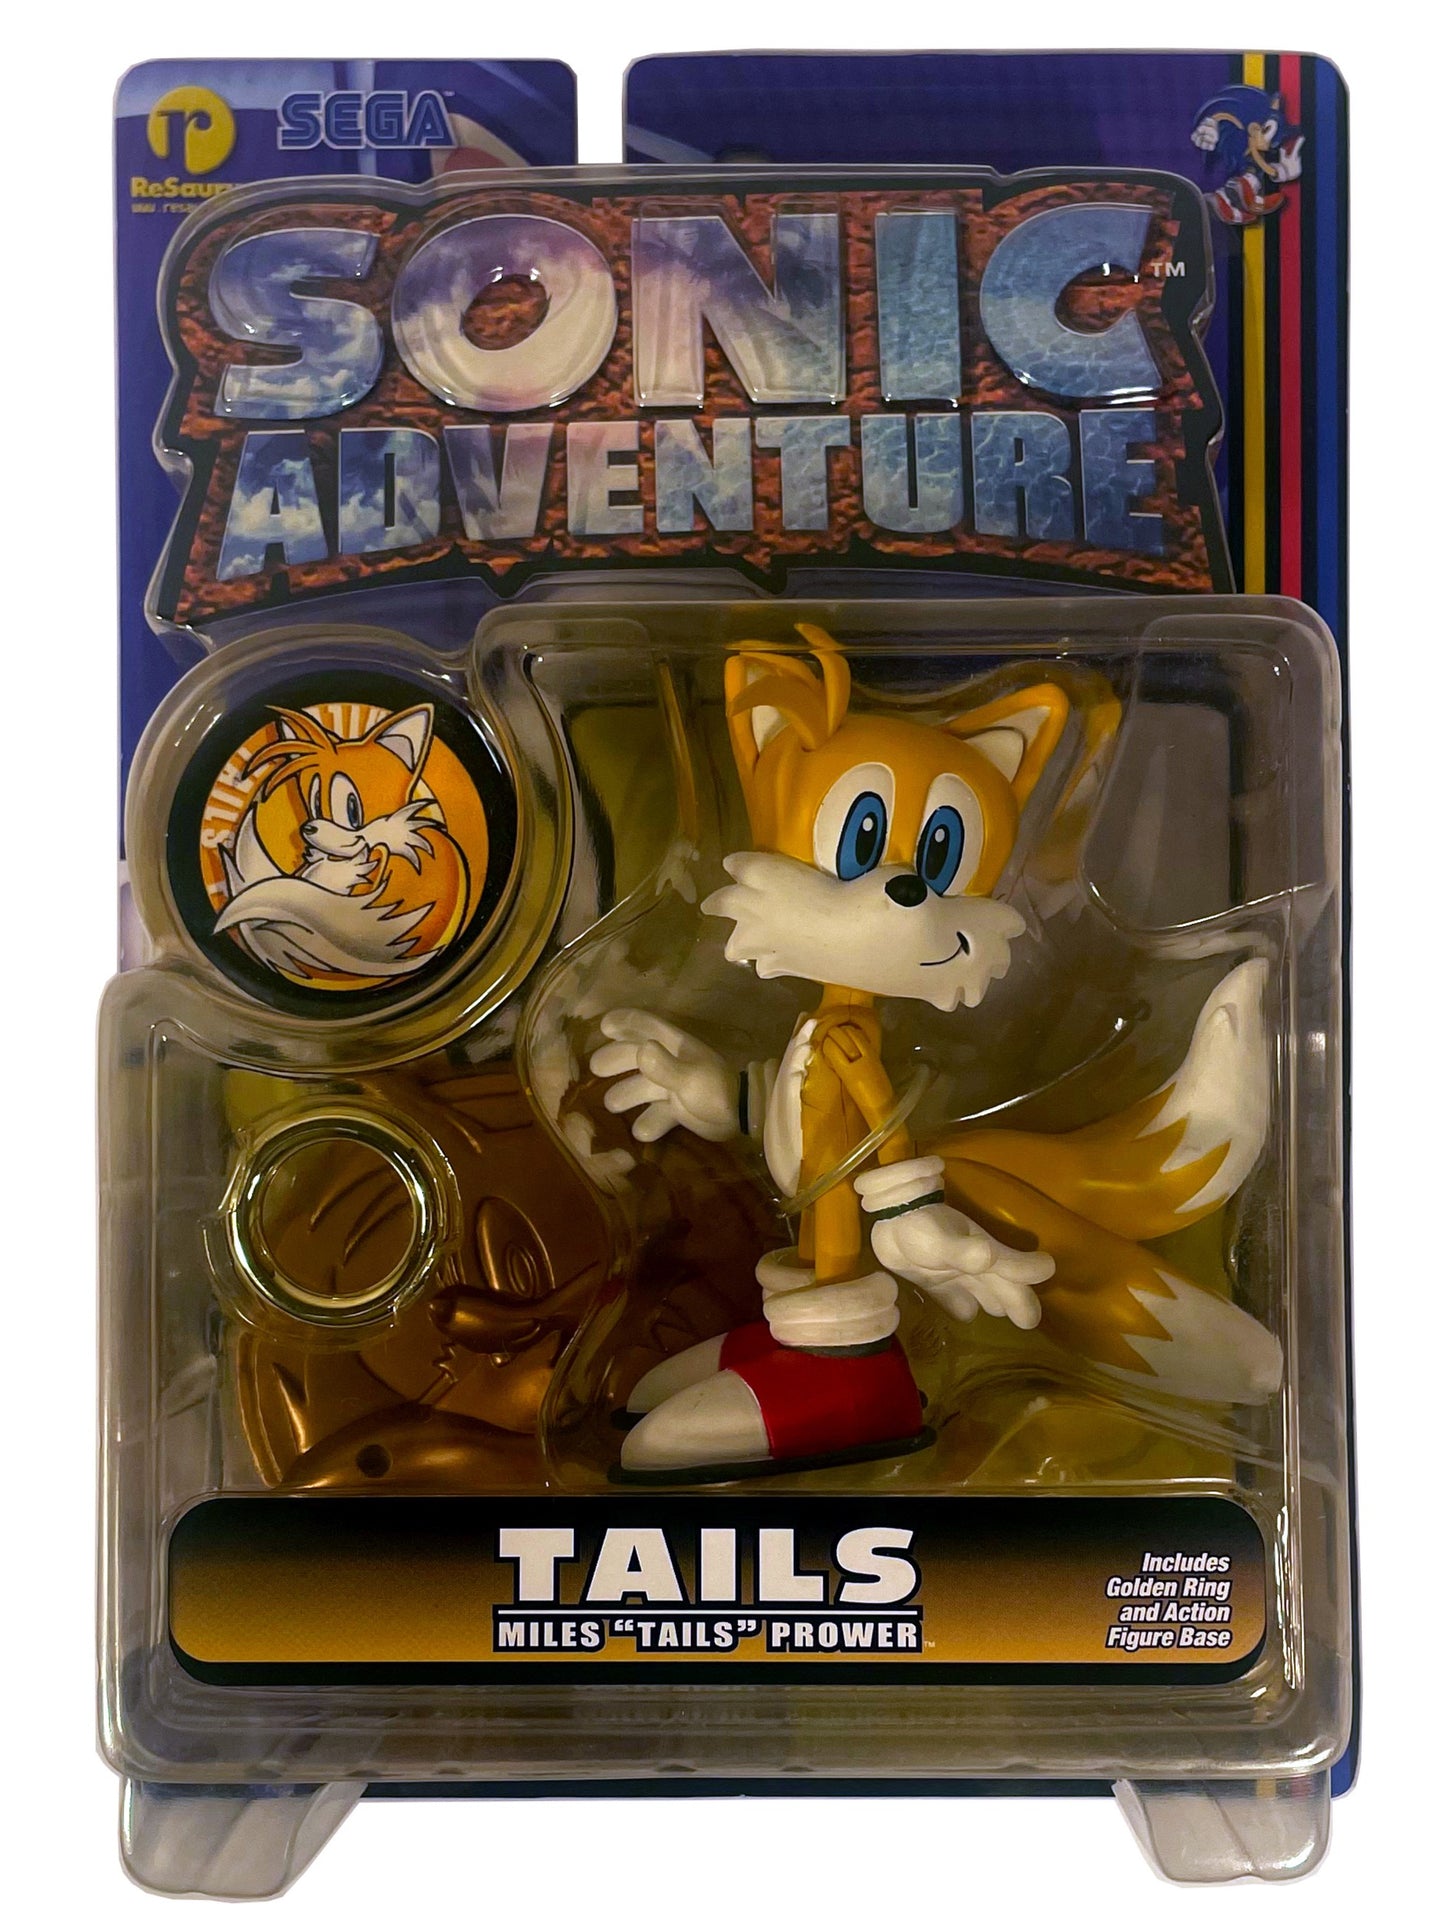 Sonic Adventure ReSaurus Miles Tails Prower Action Figure